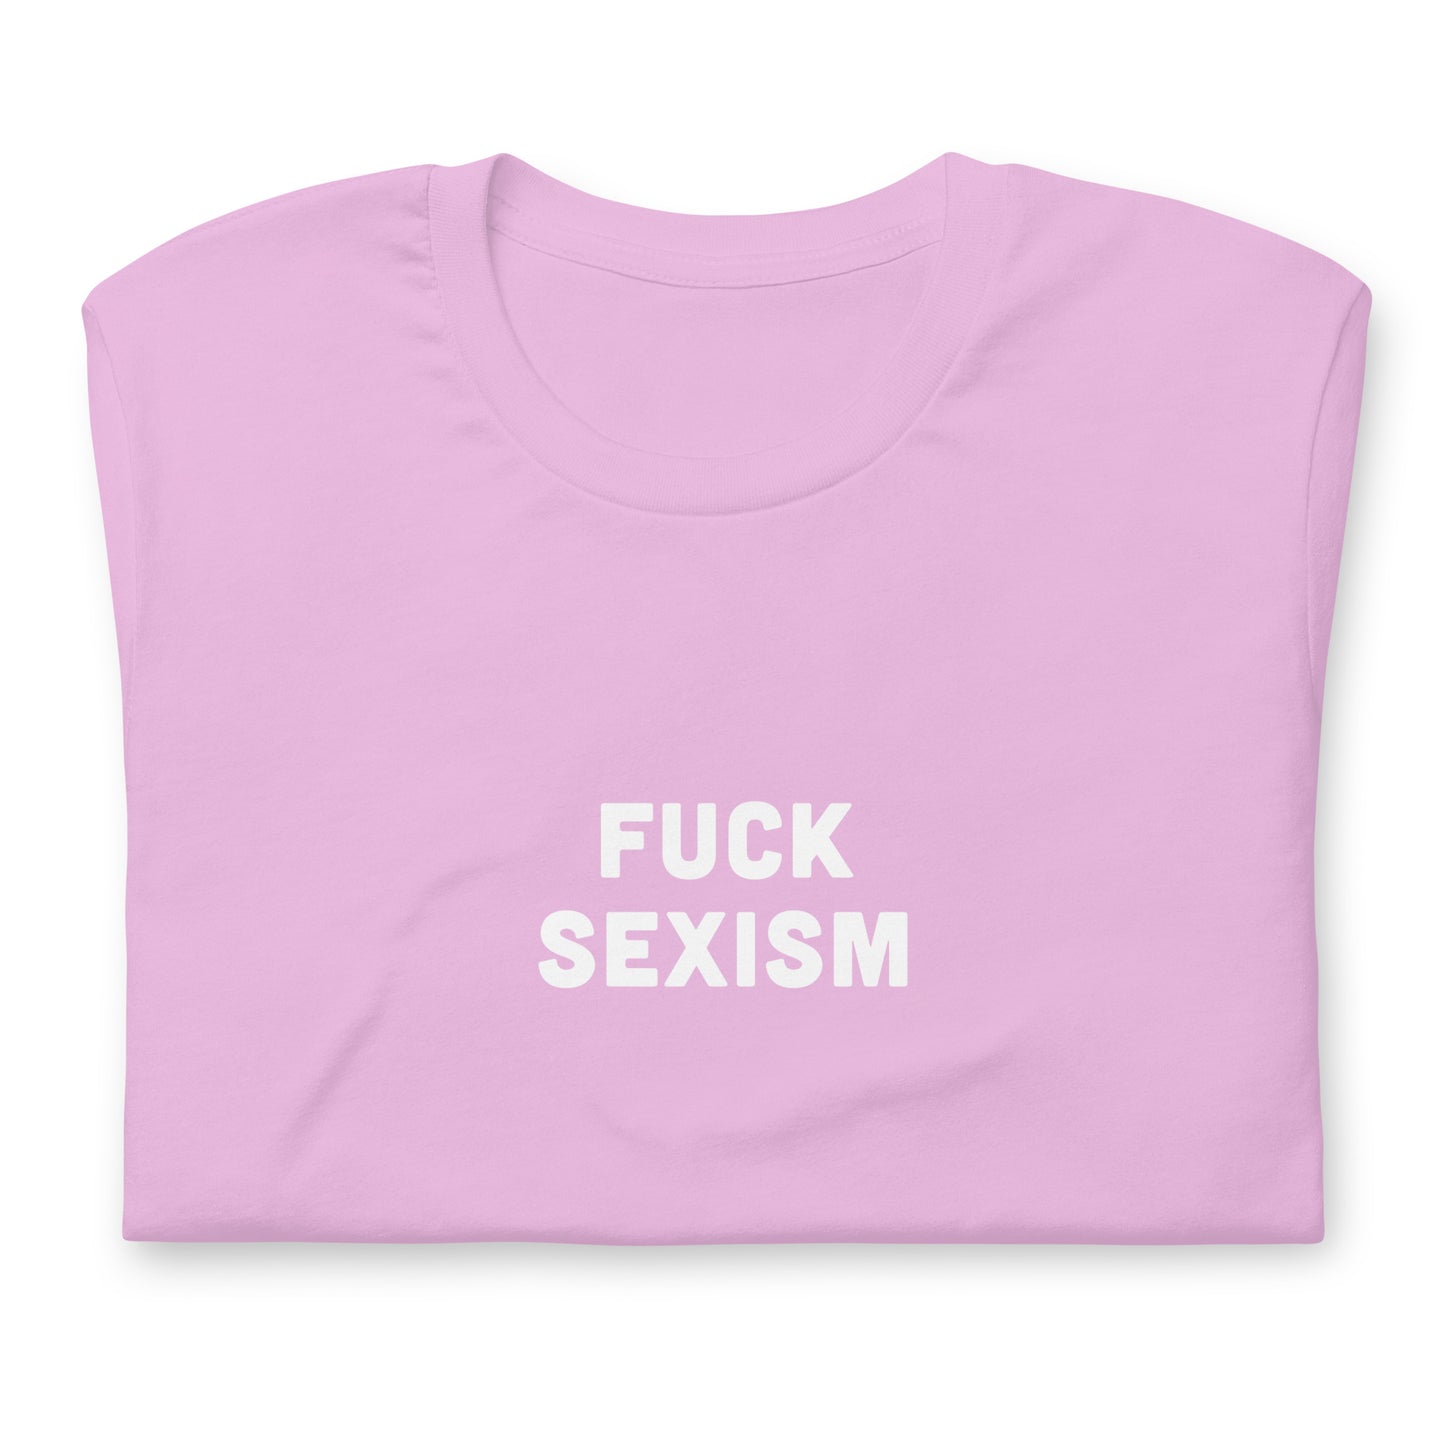 Fuck Sexism T-Shirt Size 2XL Color Forest